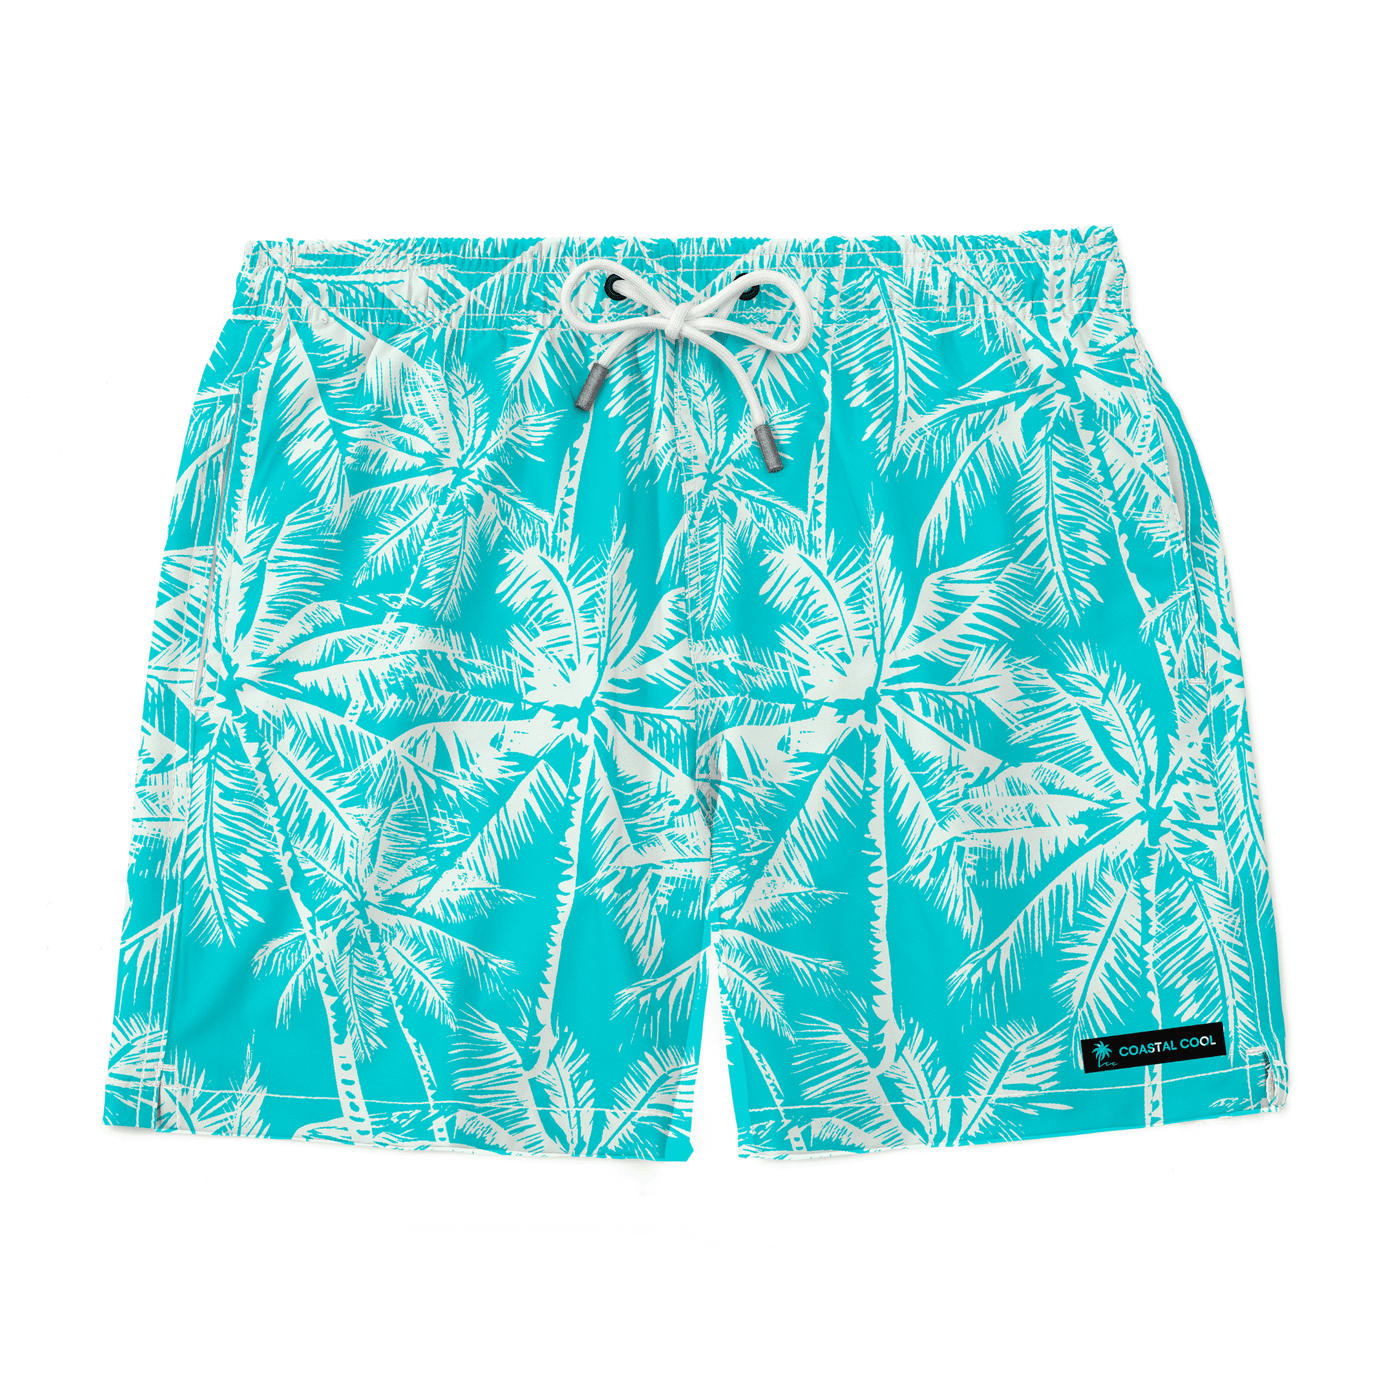 Happy Hour Swim Trunks - Coastal Cool - Swimwear and Beachwear - Recycled fabrics